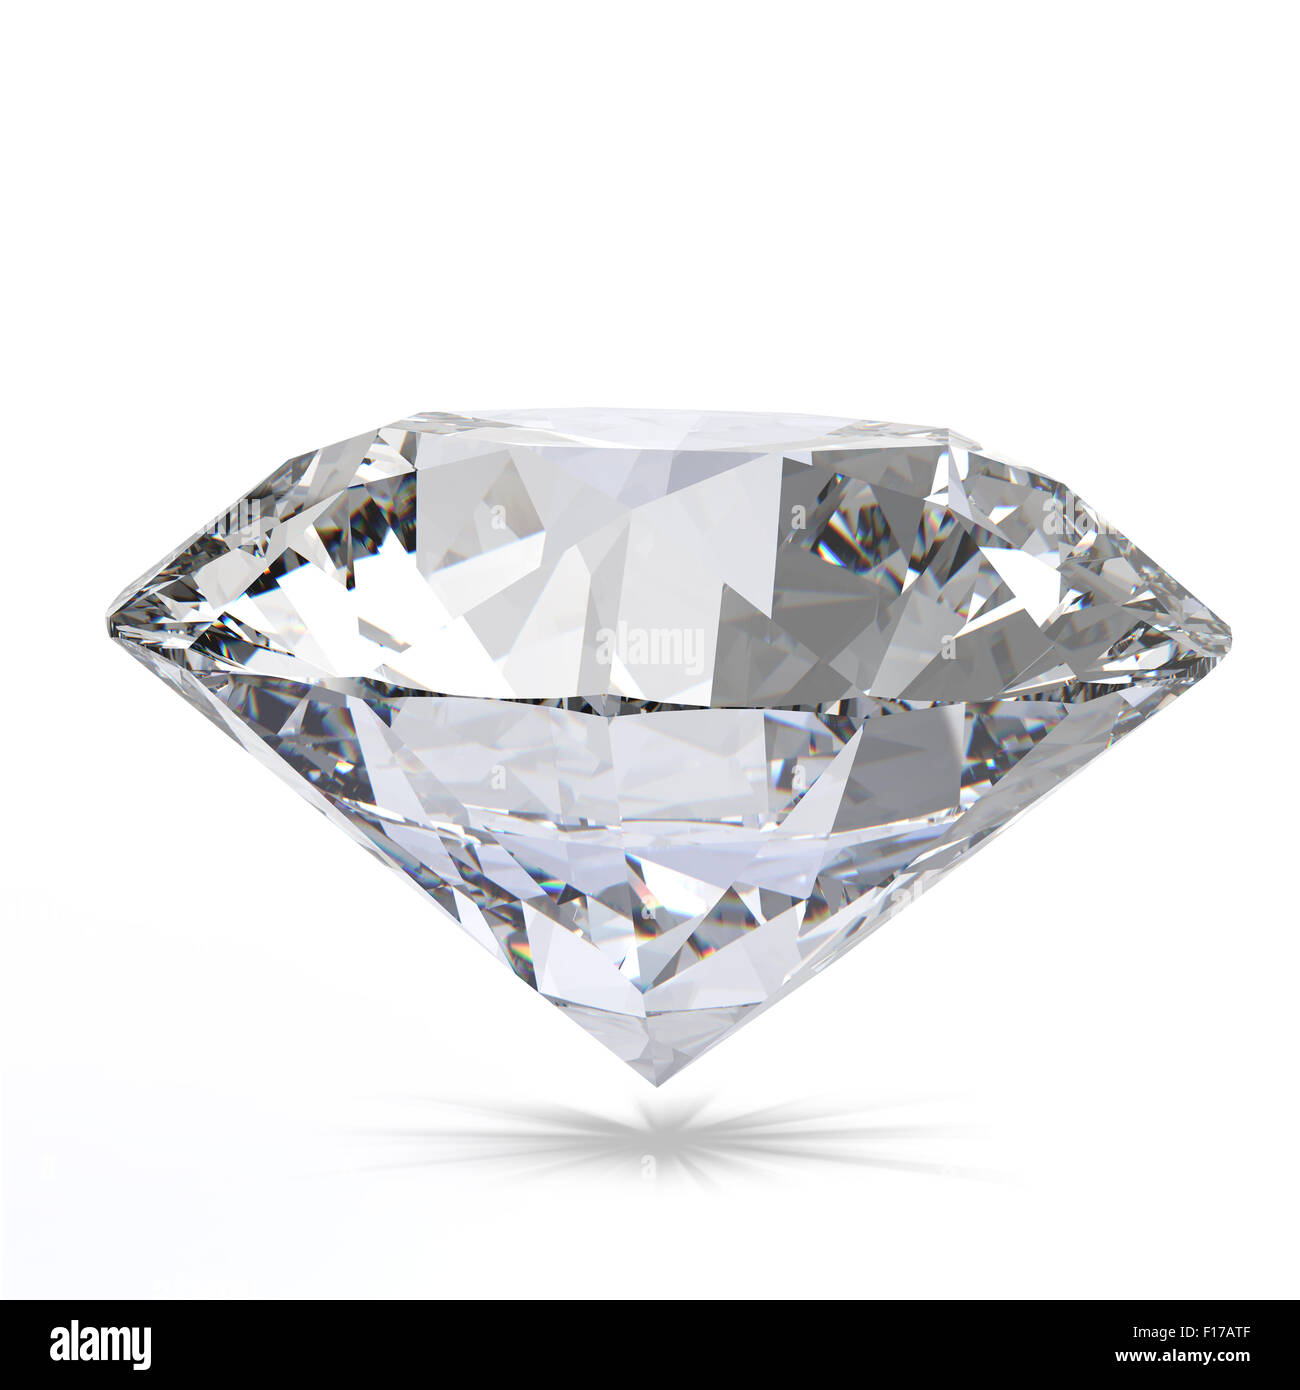 Diamond on white background 3d model Stock Photo